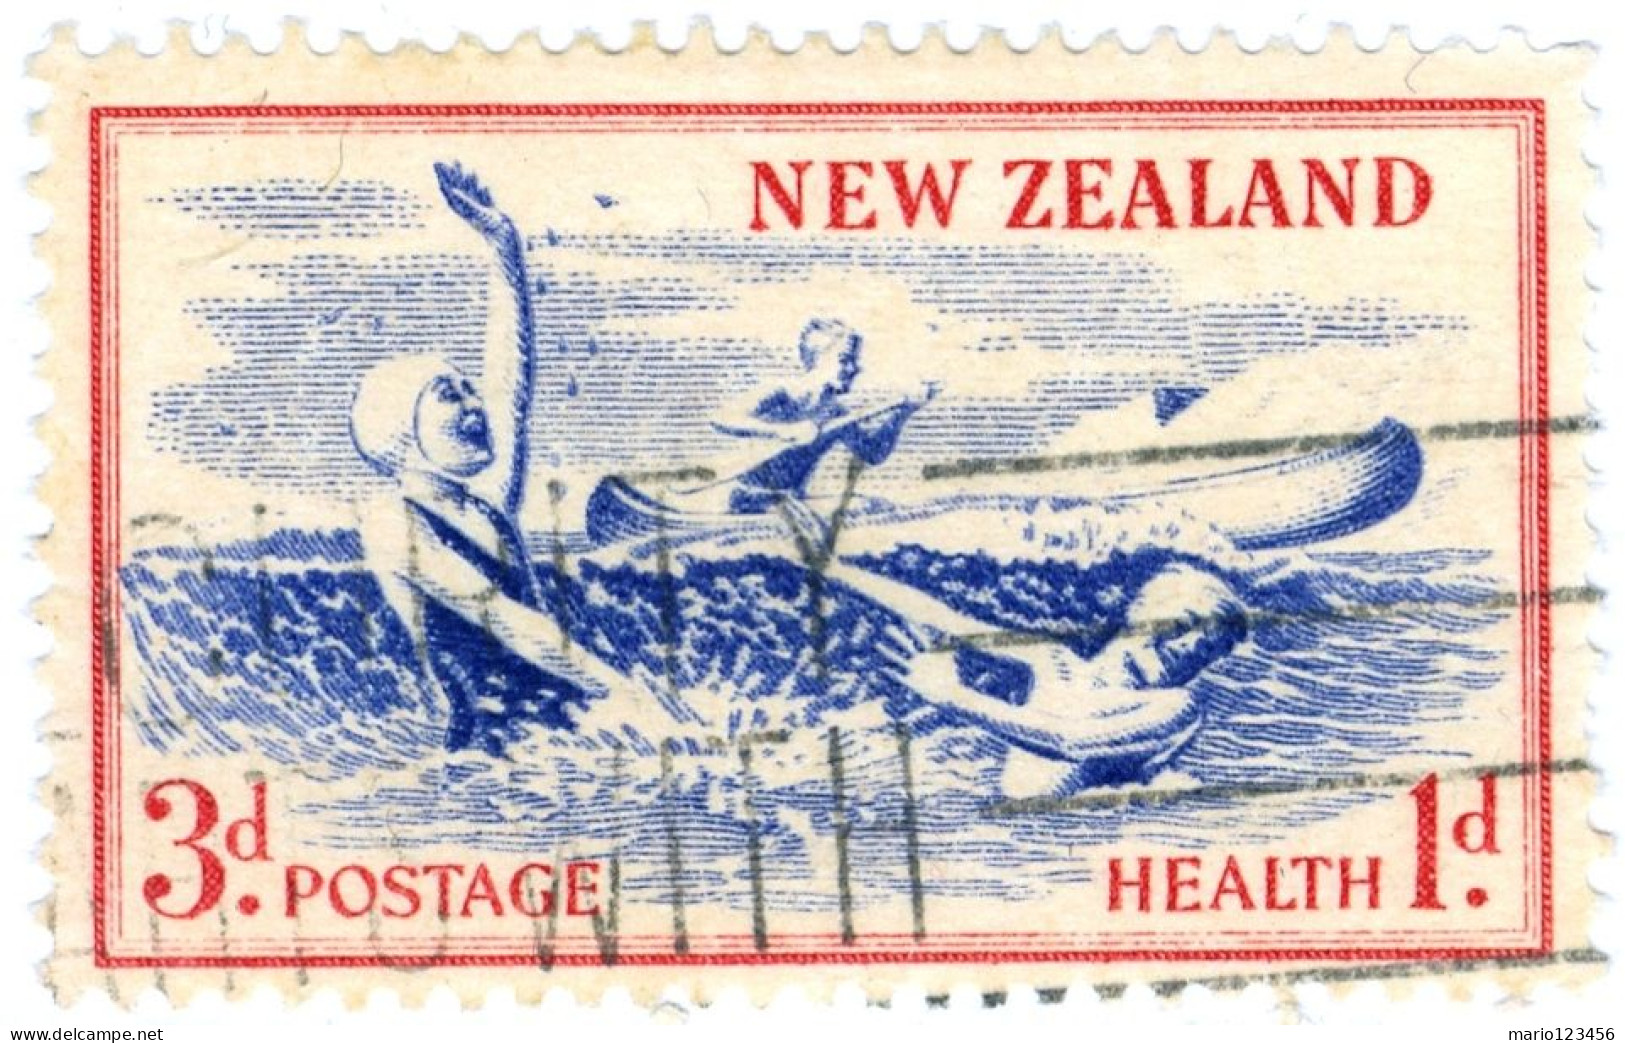 NUOVA ZELANDA, NEW ZEALAND, SPORT, 1957, FRANCOBOLLI USATI Scott:NZ B53, Yt:NZ 363, Sg:NZ 762 - Gebruikt